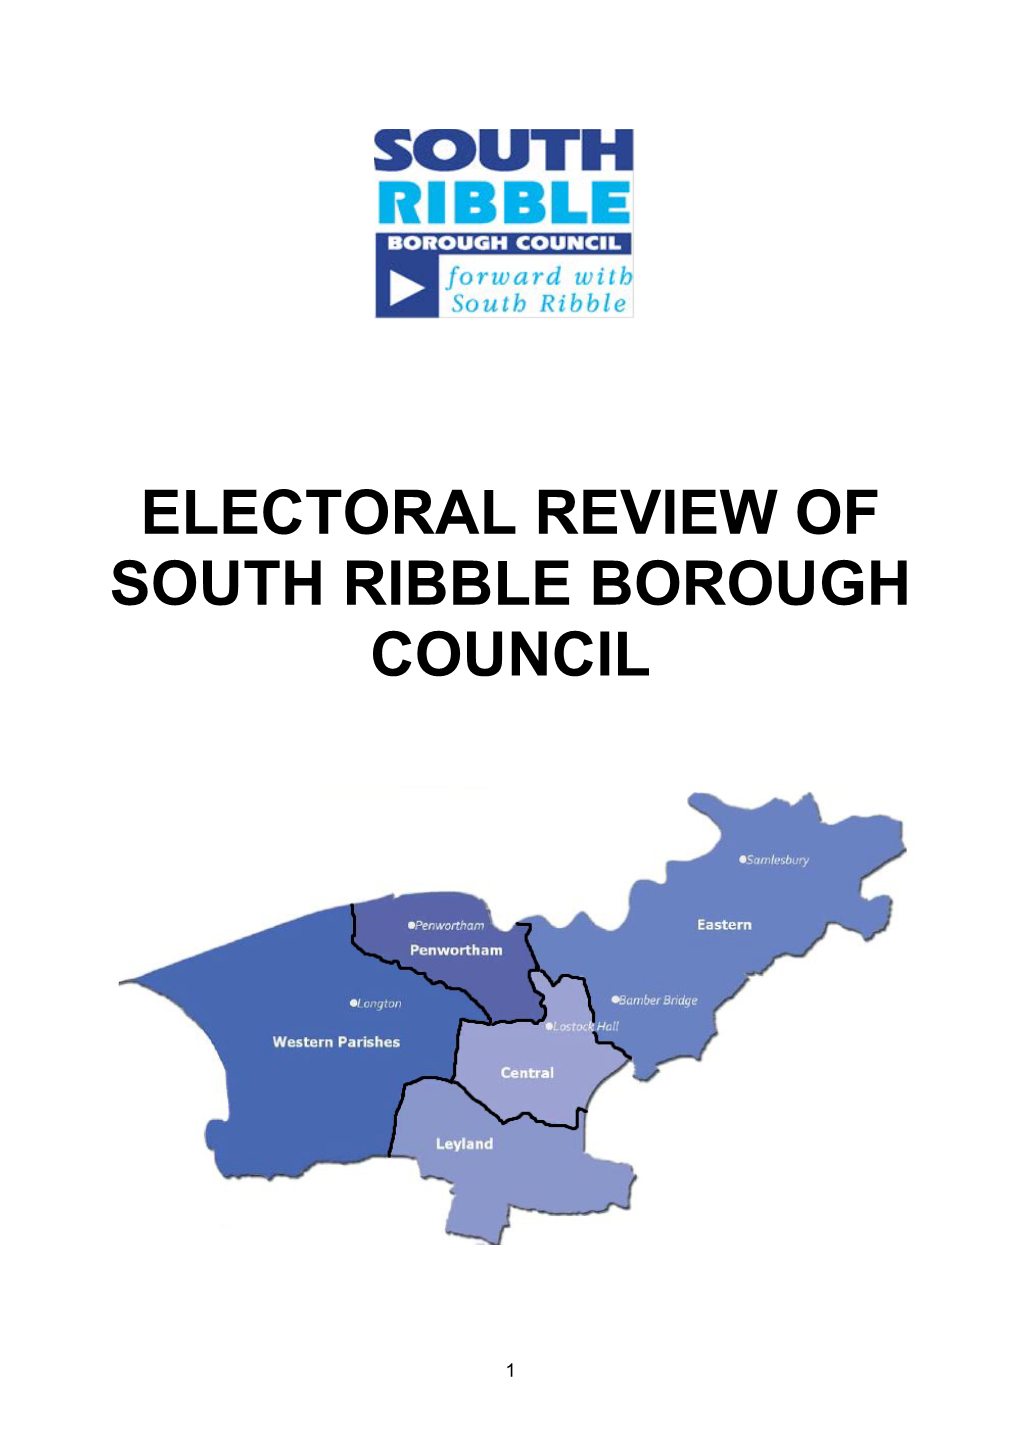 South Ribble Borough Council